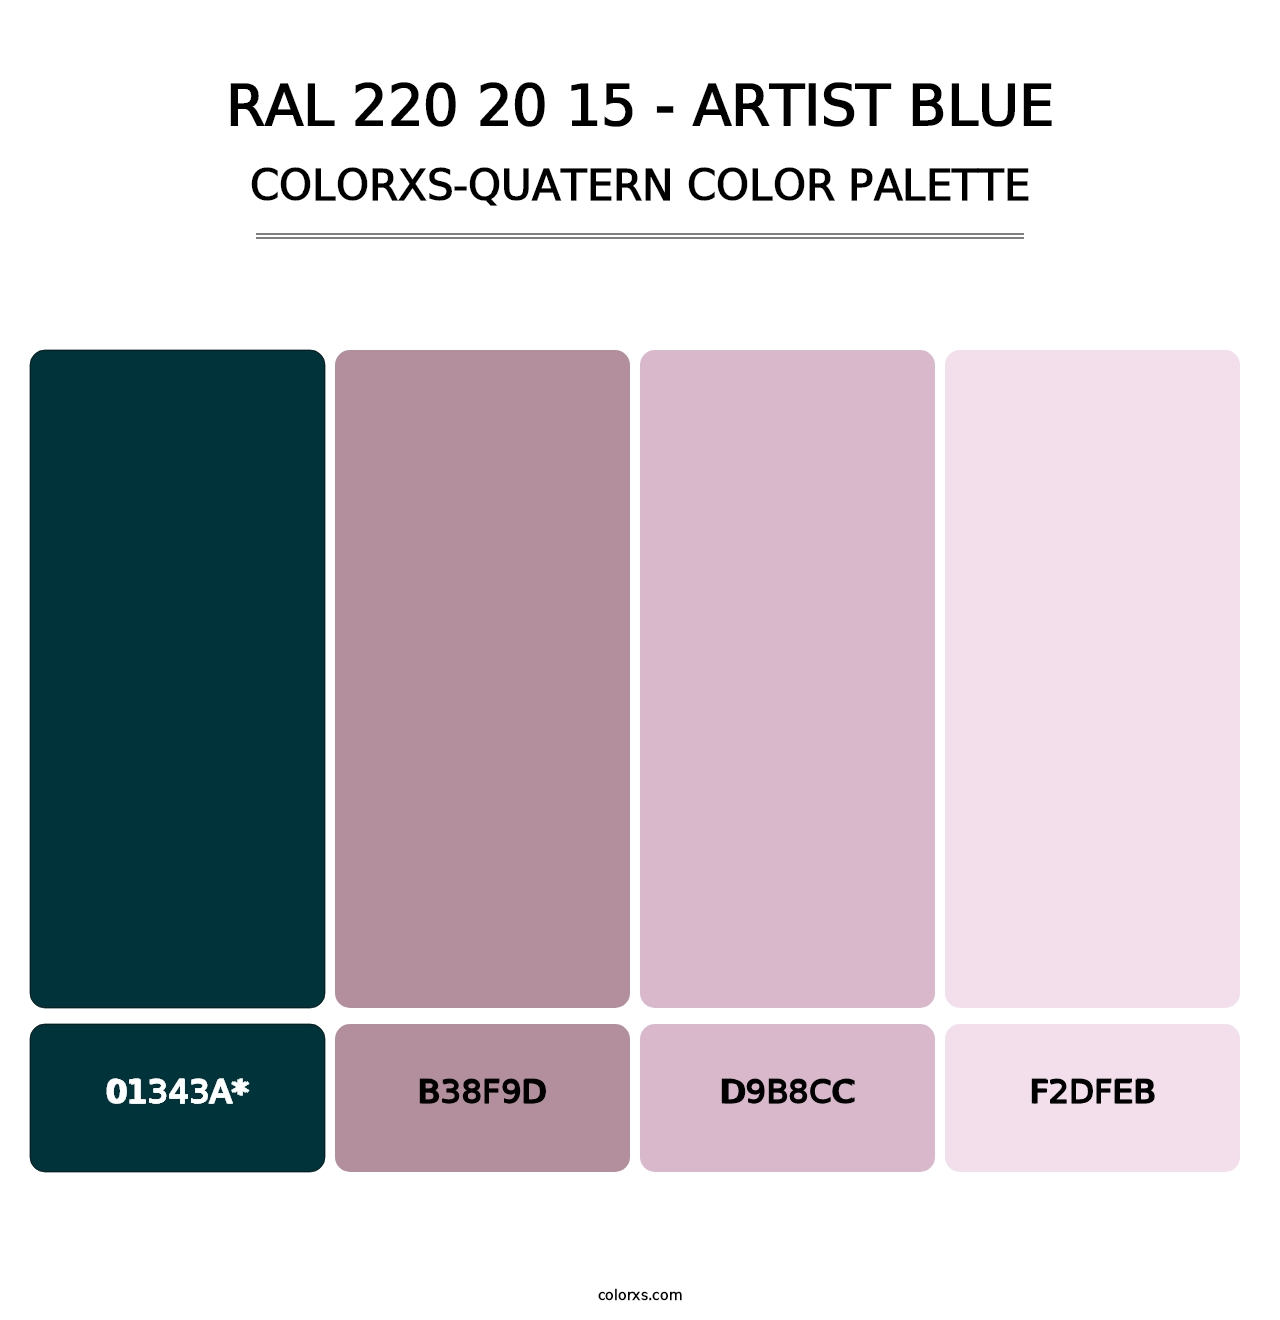 RAL 220 20 15 - Artist Blue - Colorxs Quatern Palette